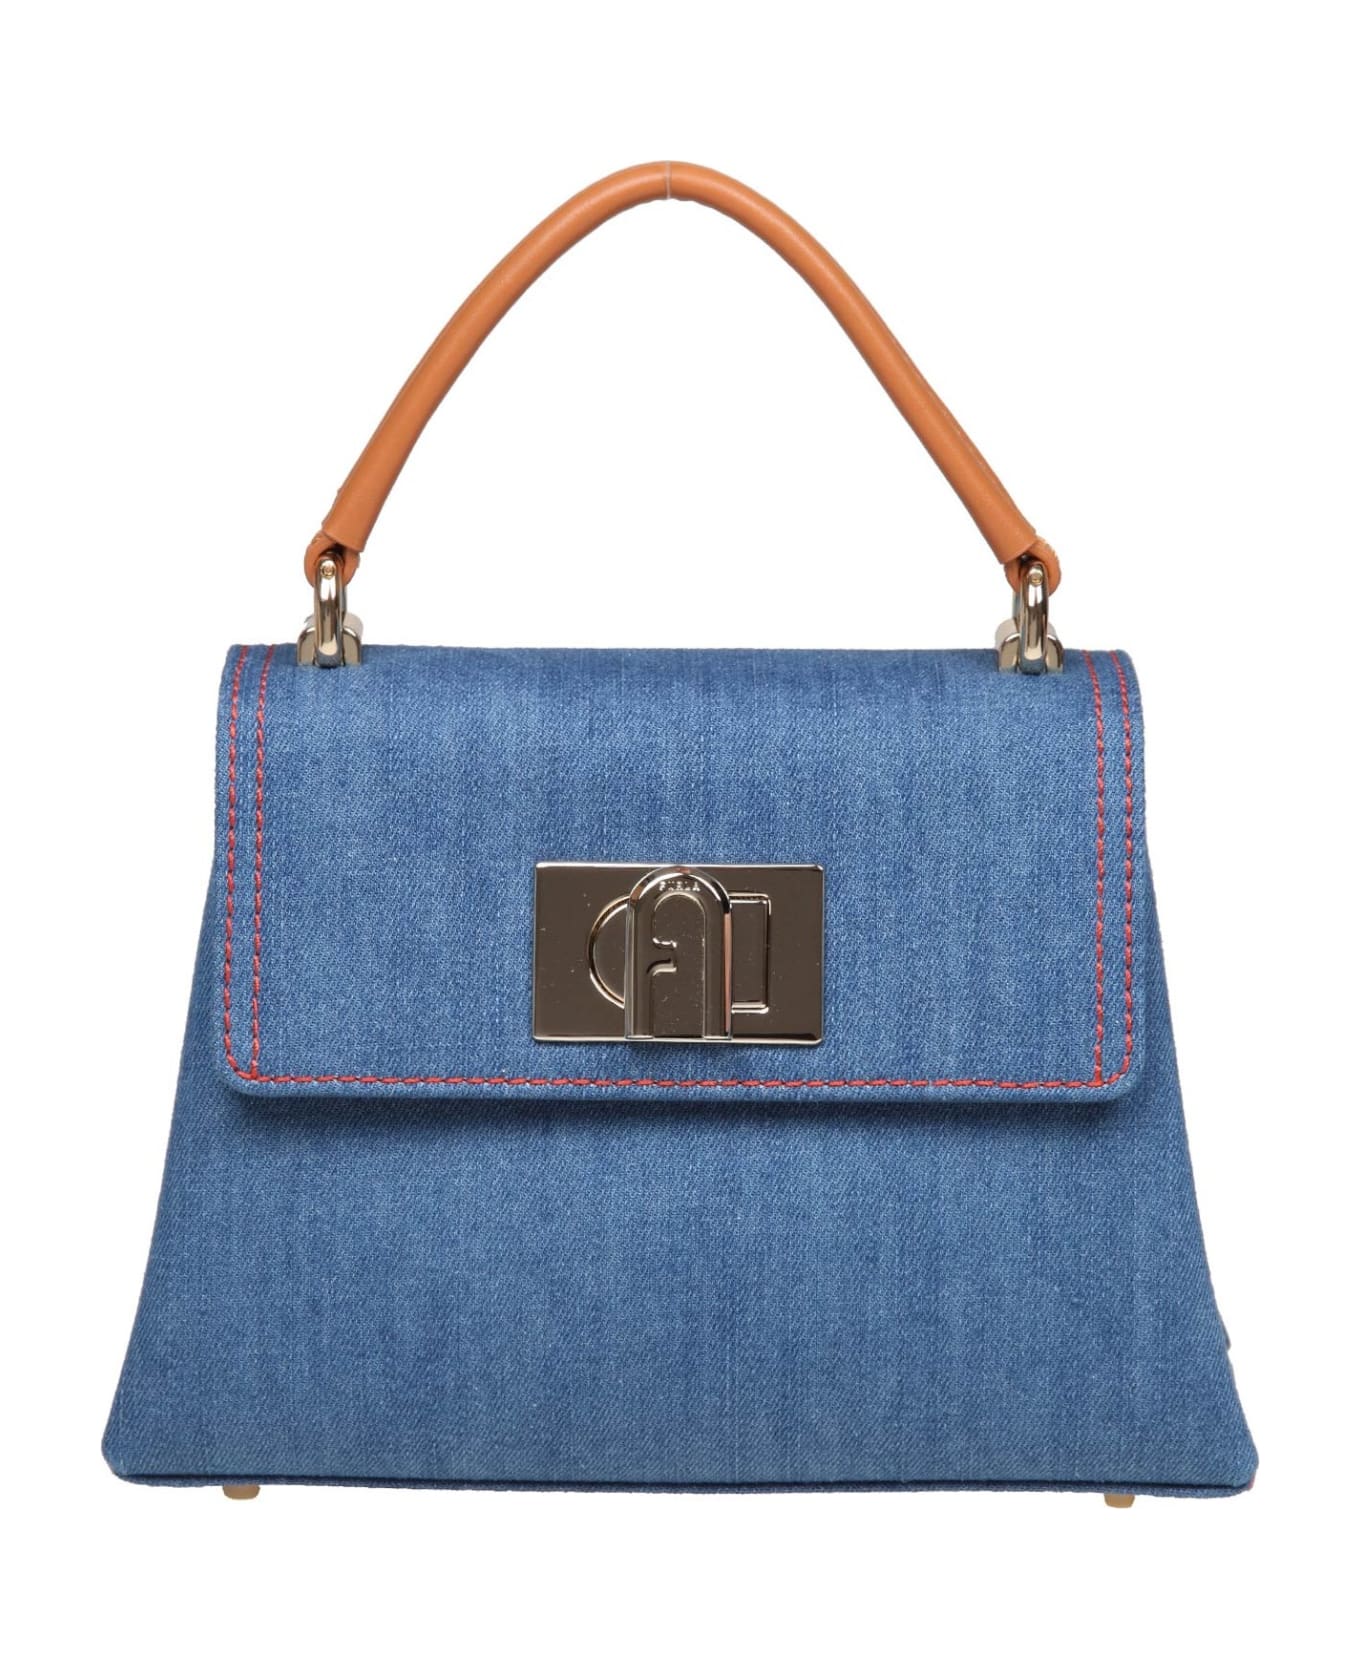 Furla 1927 Mini Handbag In Blue Jeans Fabric - S Mediterraneo トートバッグ